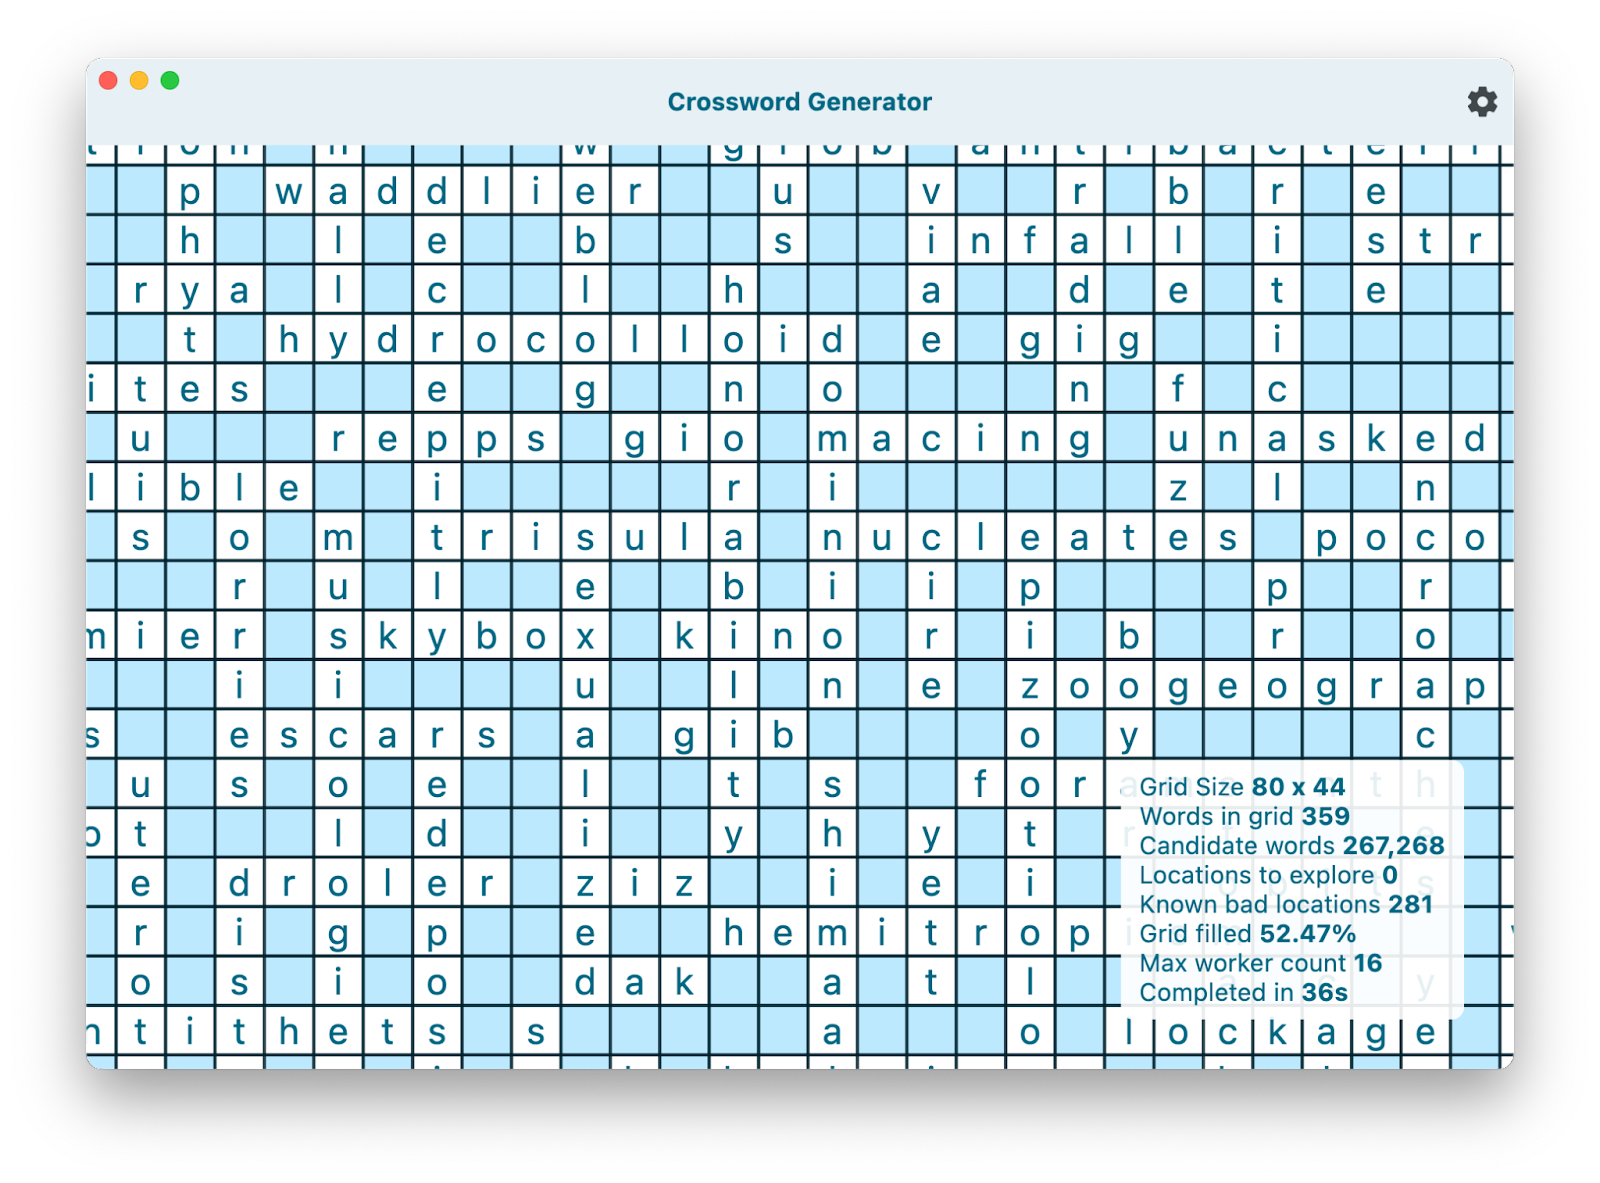 Crossword Generator window with words and statistics